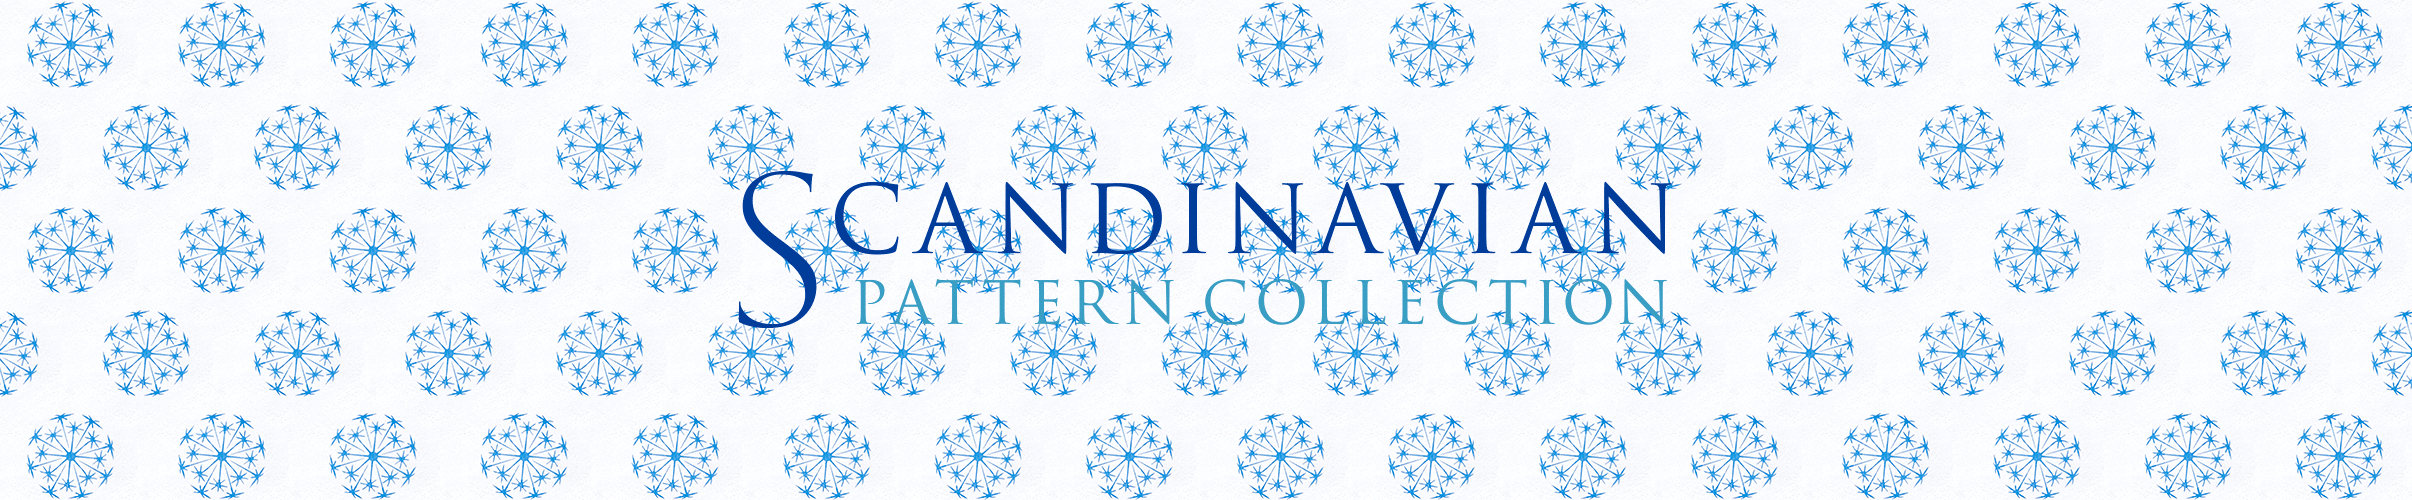 Scandinavian Pattern Collection?スカンジナビアン パターン コレクション